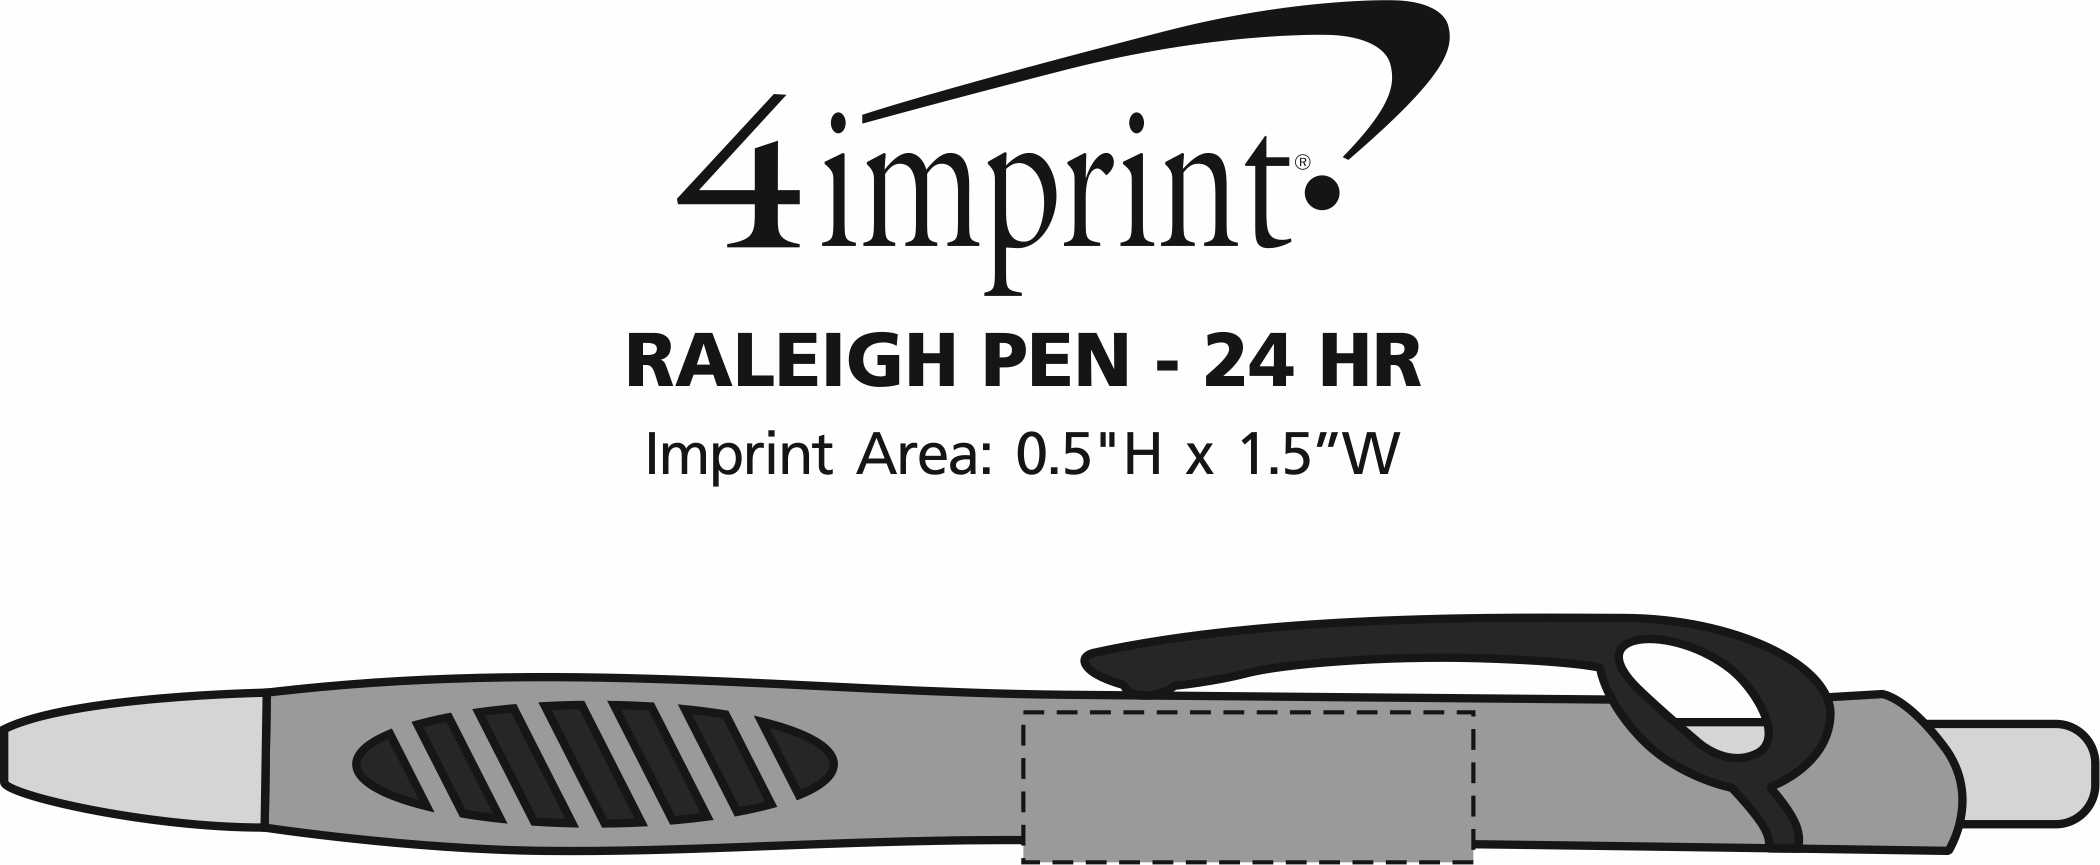 Imprint Area of Raleigh Pen - 24 hr